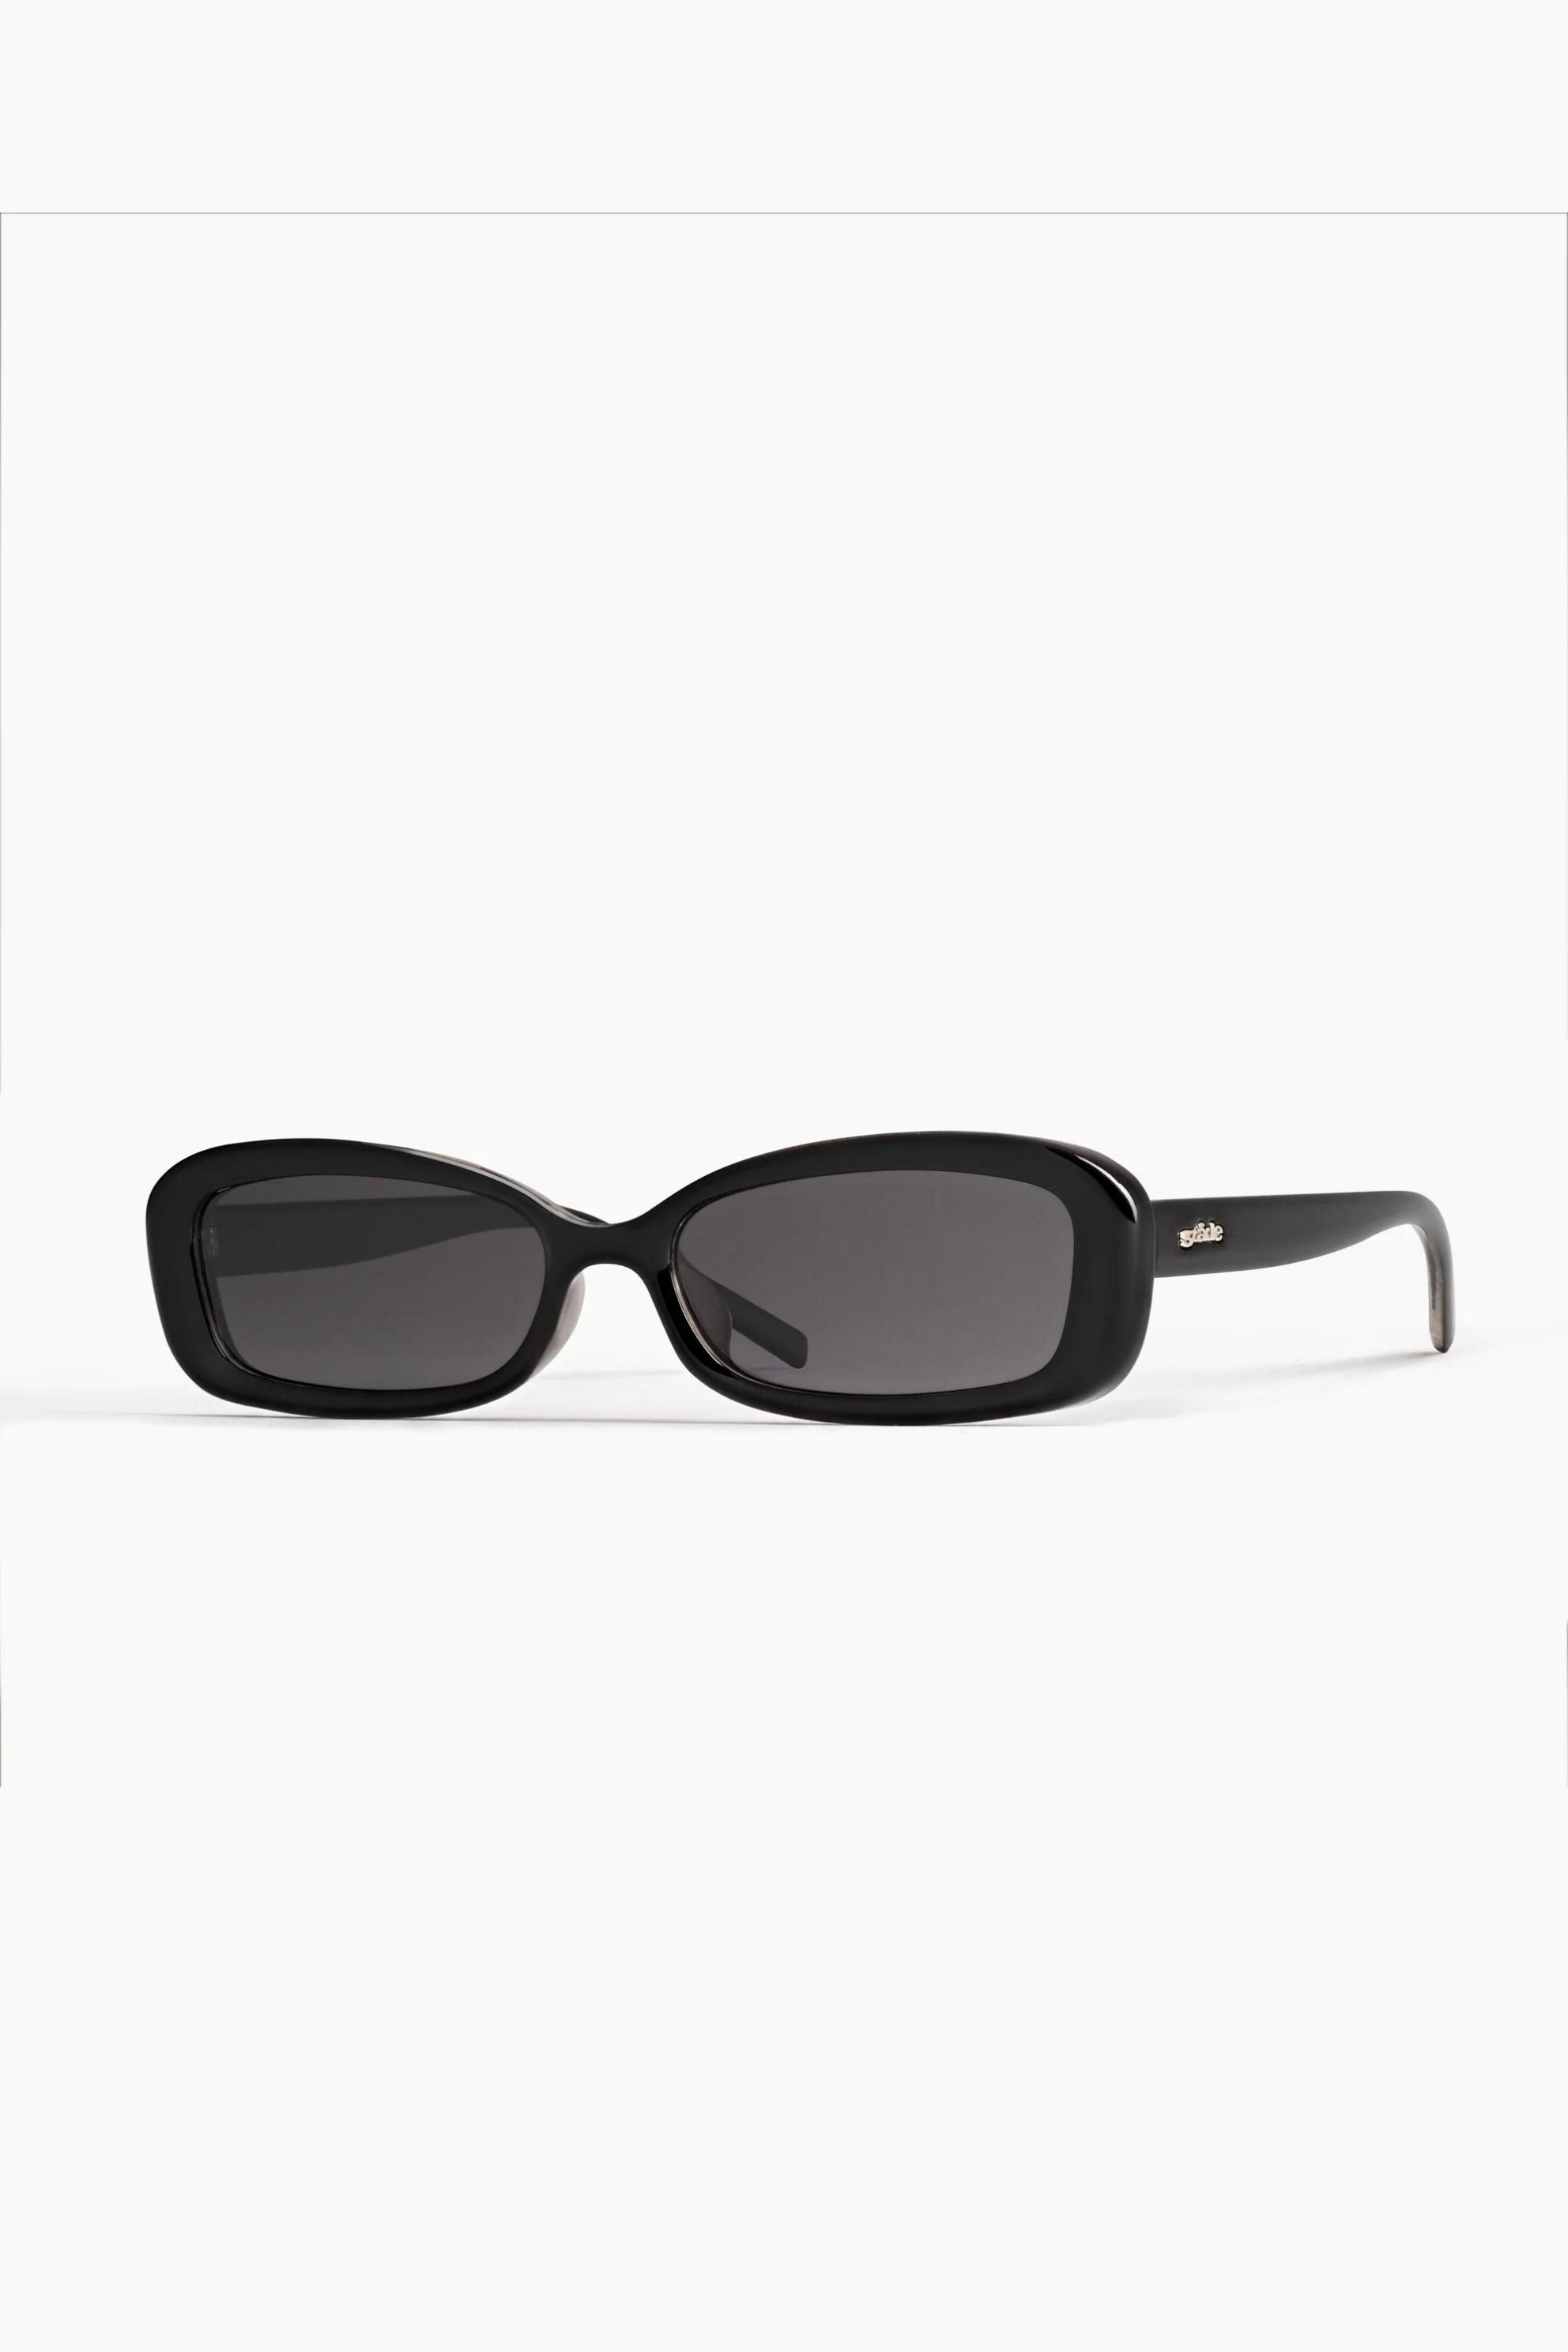 Page Sunglasses Elysium Double Black / Ink